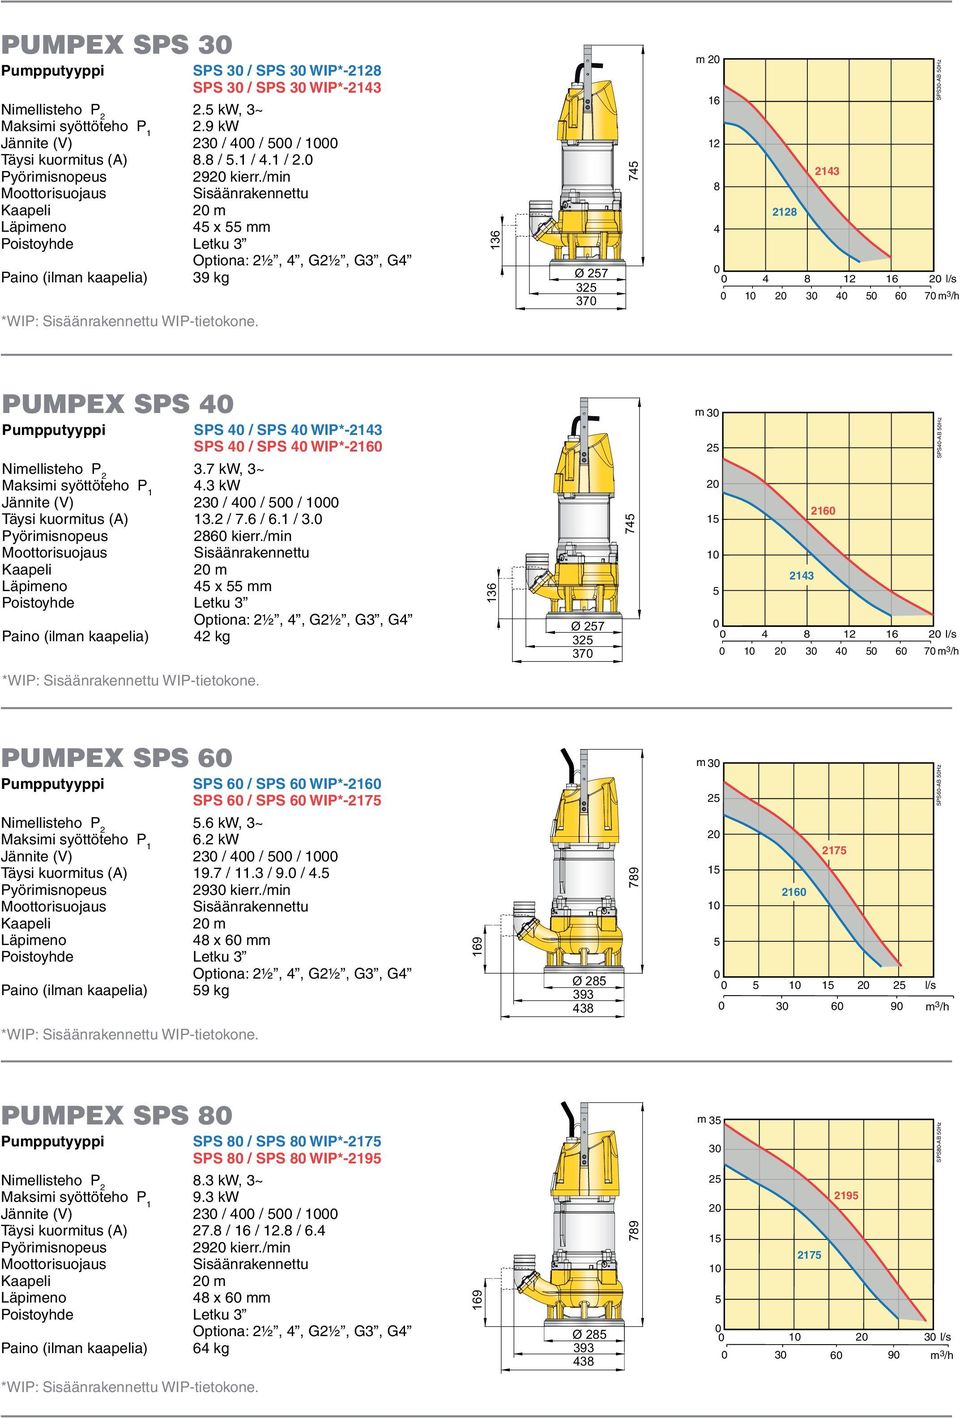 SPS 4 WIP*-216 3.7 kw, 3~ 4.3 kw Jännite (V) 23 / 4 / 5 / 1 Täysi kuormitus (A) 13.2 / 7.6 / 6.1 / 3. 286 kierr.